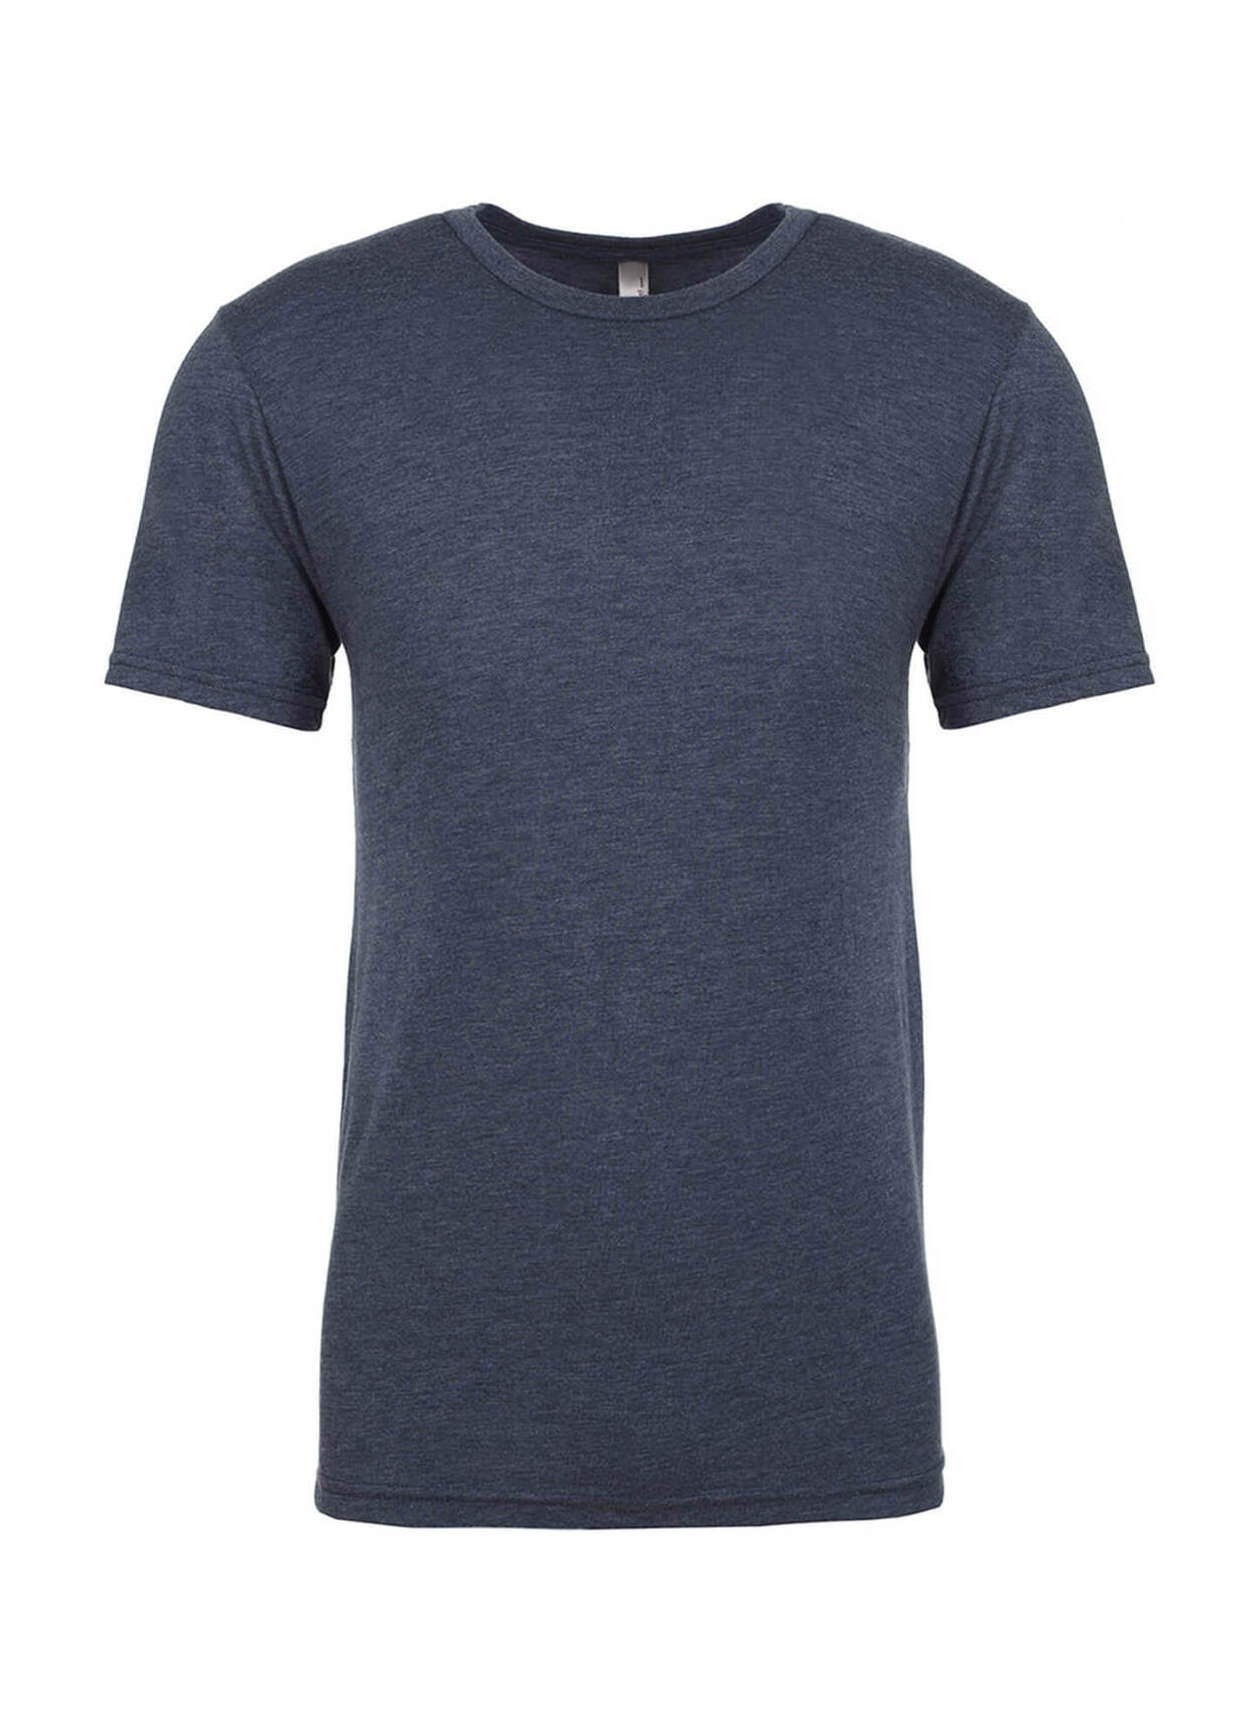 Next Level Men's Indigo Unisex Triblend T-Shirt